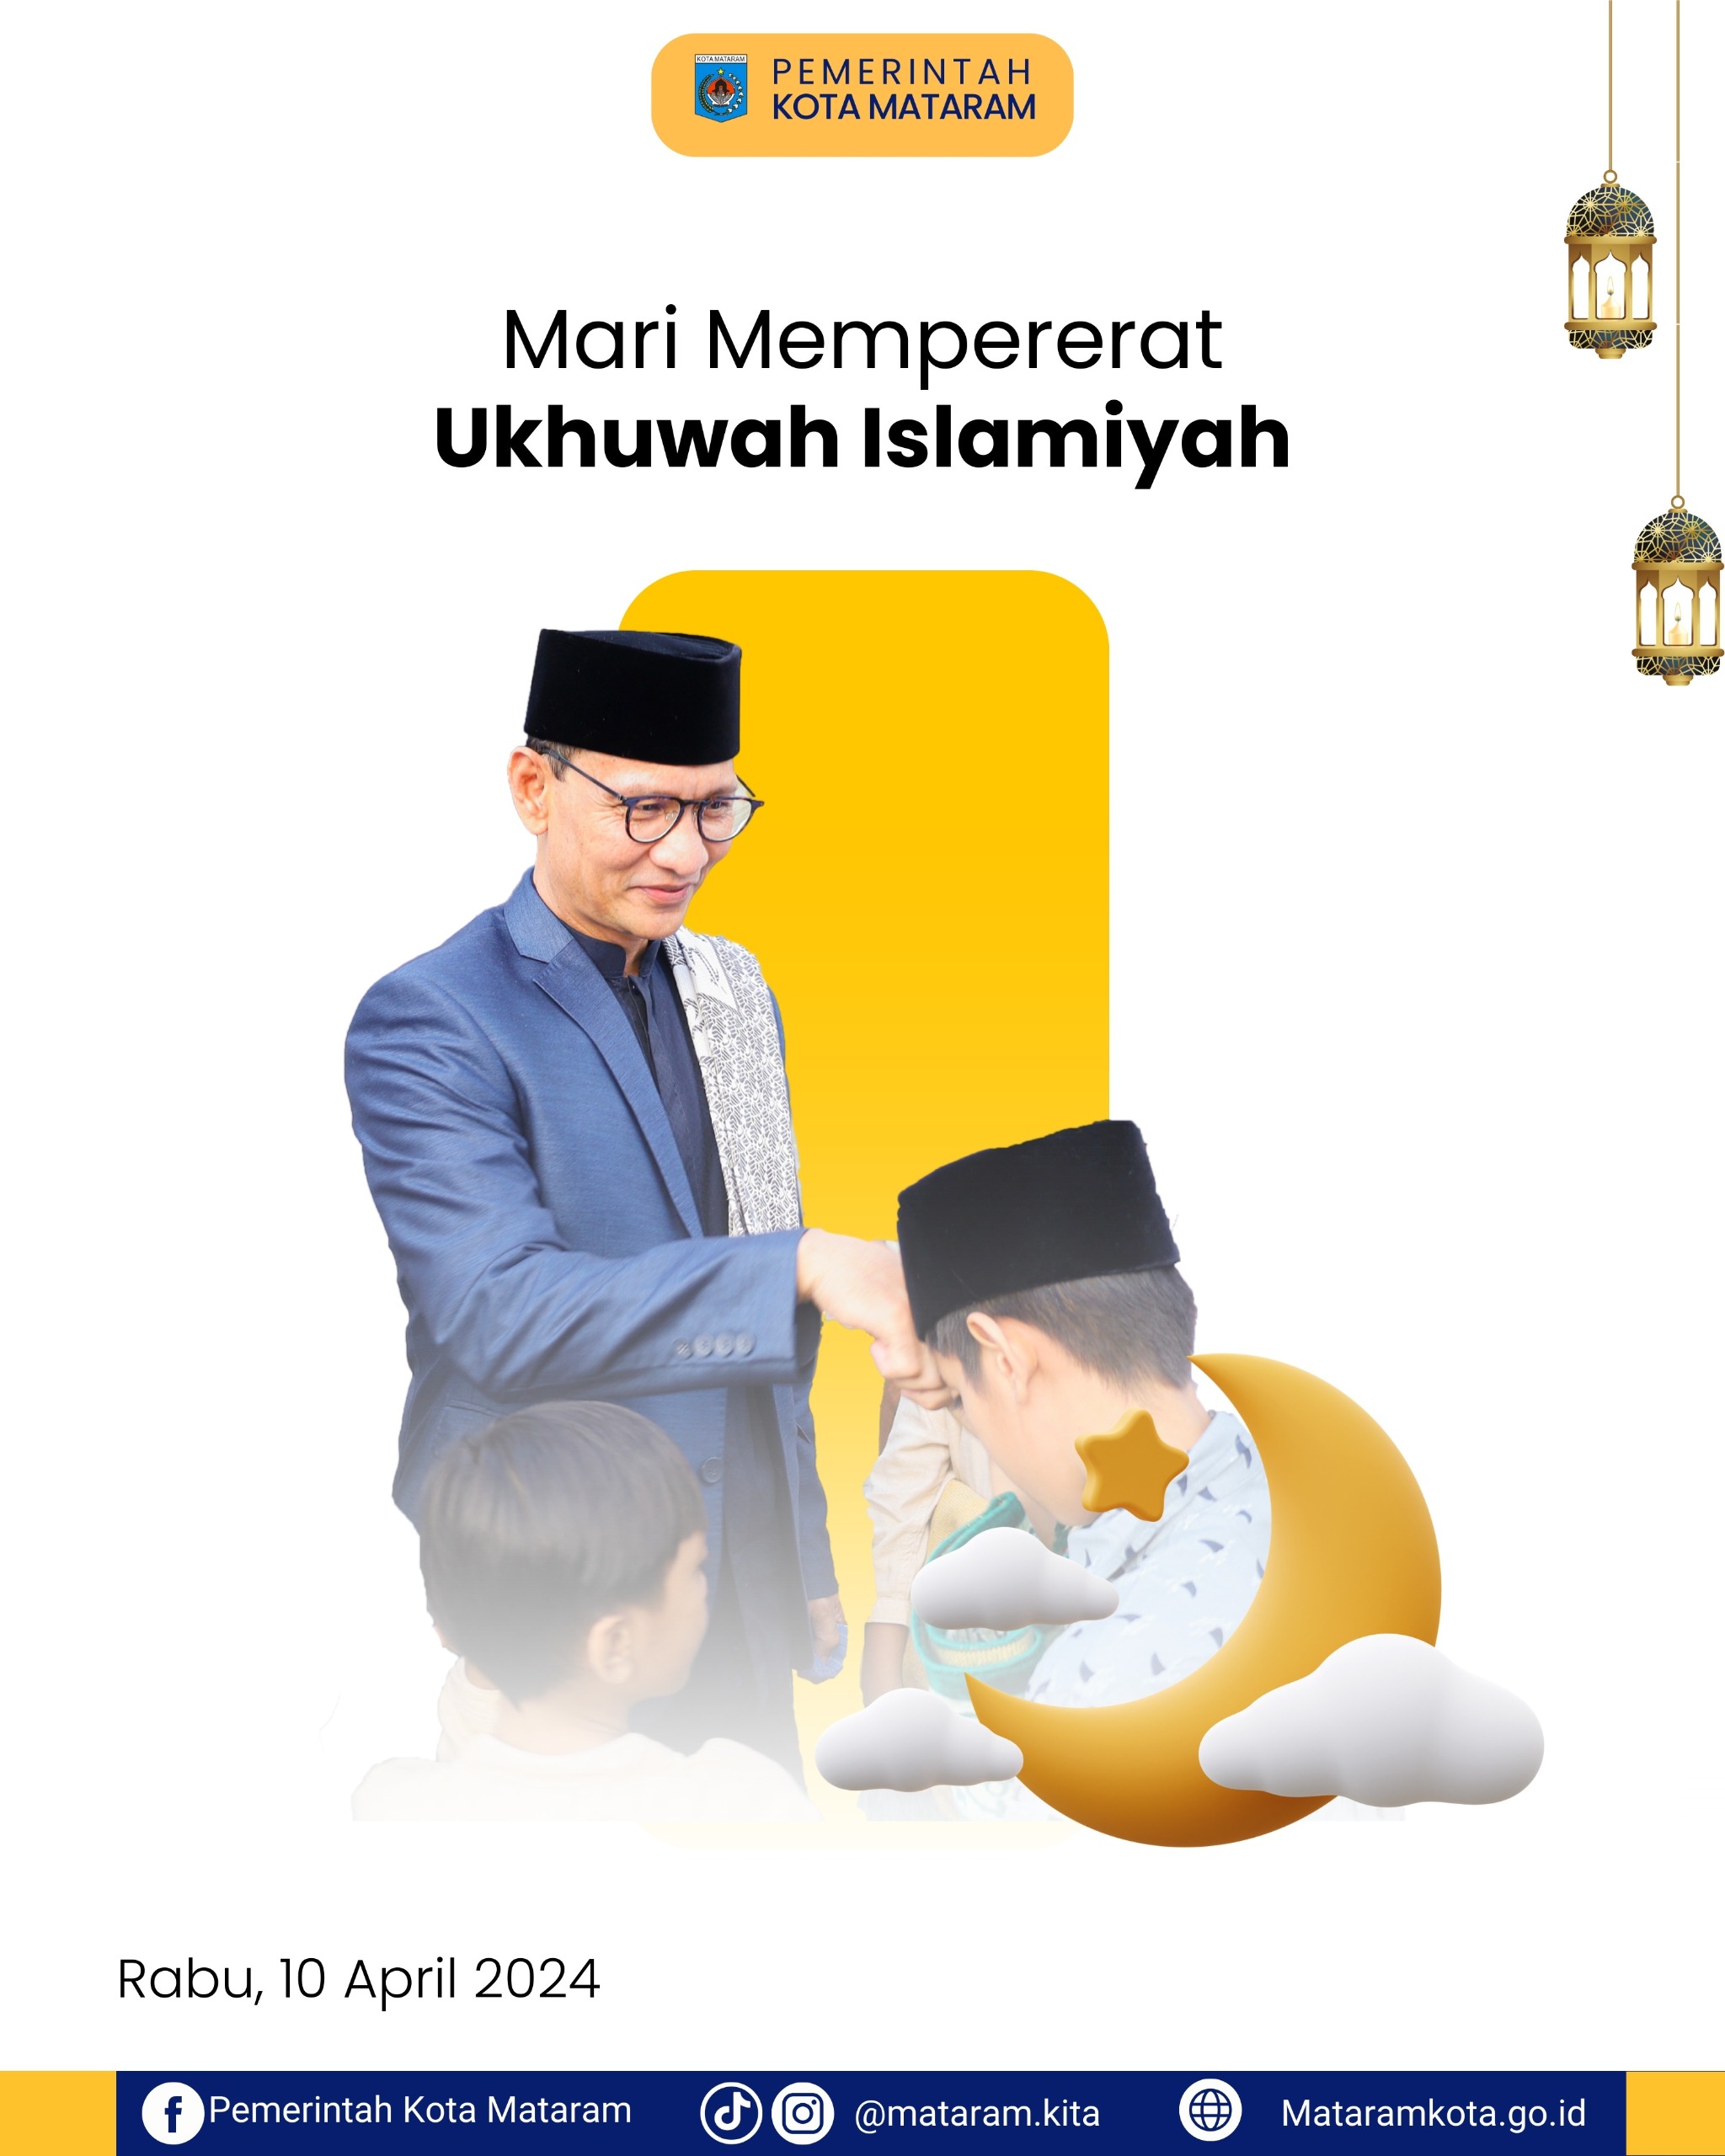 Mari mempererat Ukhuwah Islamiyah